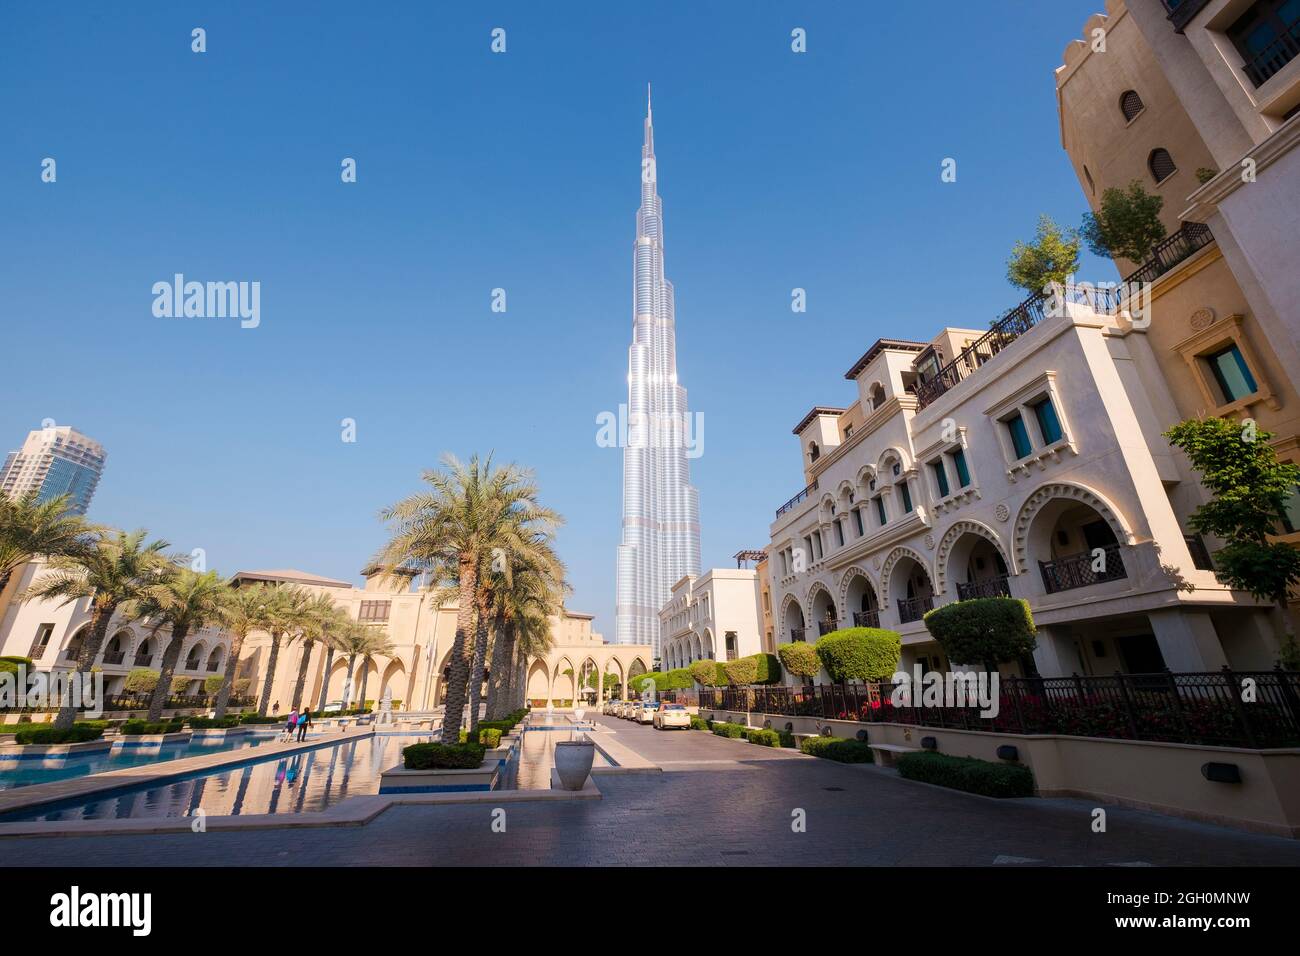 The skyscraper Burj Khalifa in the background of new mixed development. In Dubai, United Arab Emirates. Stock Photo